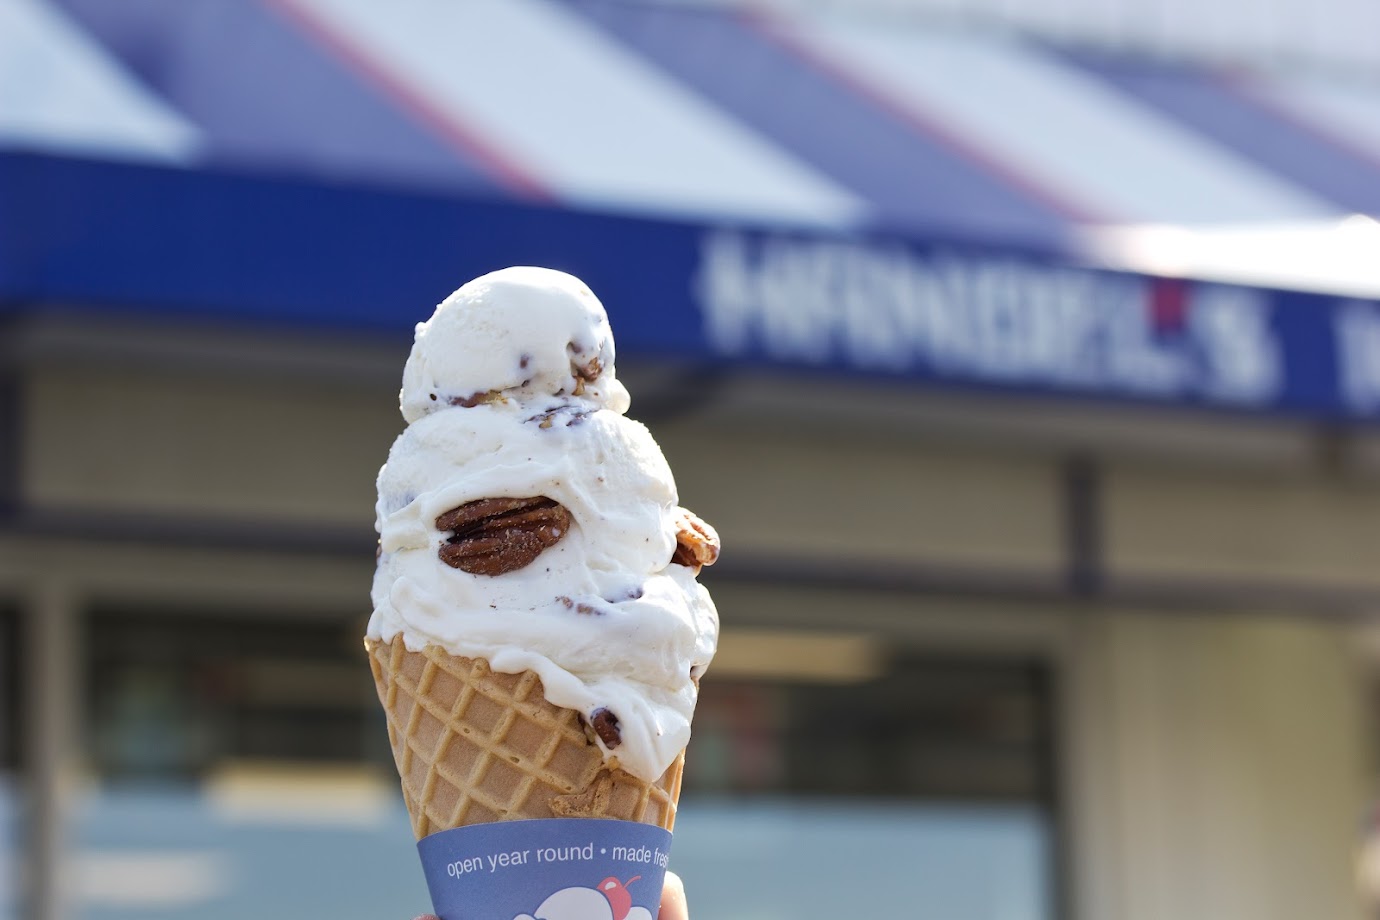 Handel's Homemade Ice Cream- Tempe Marketplace